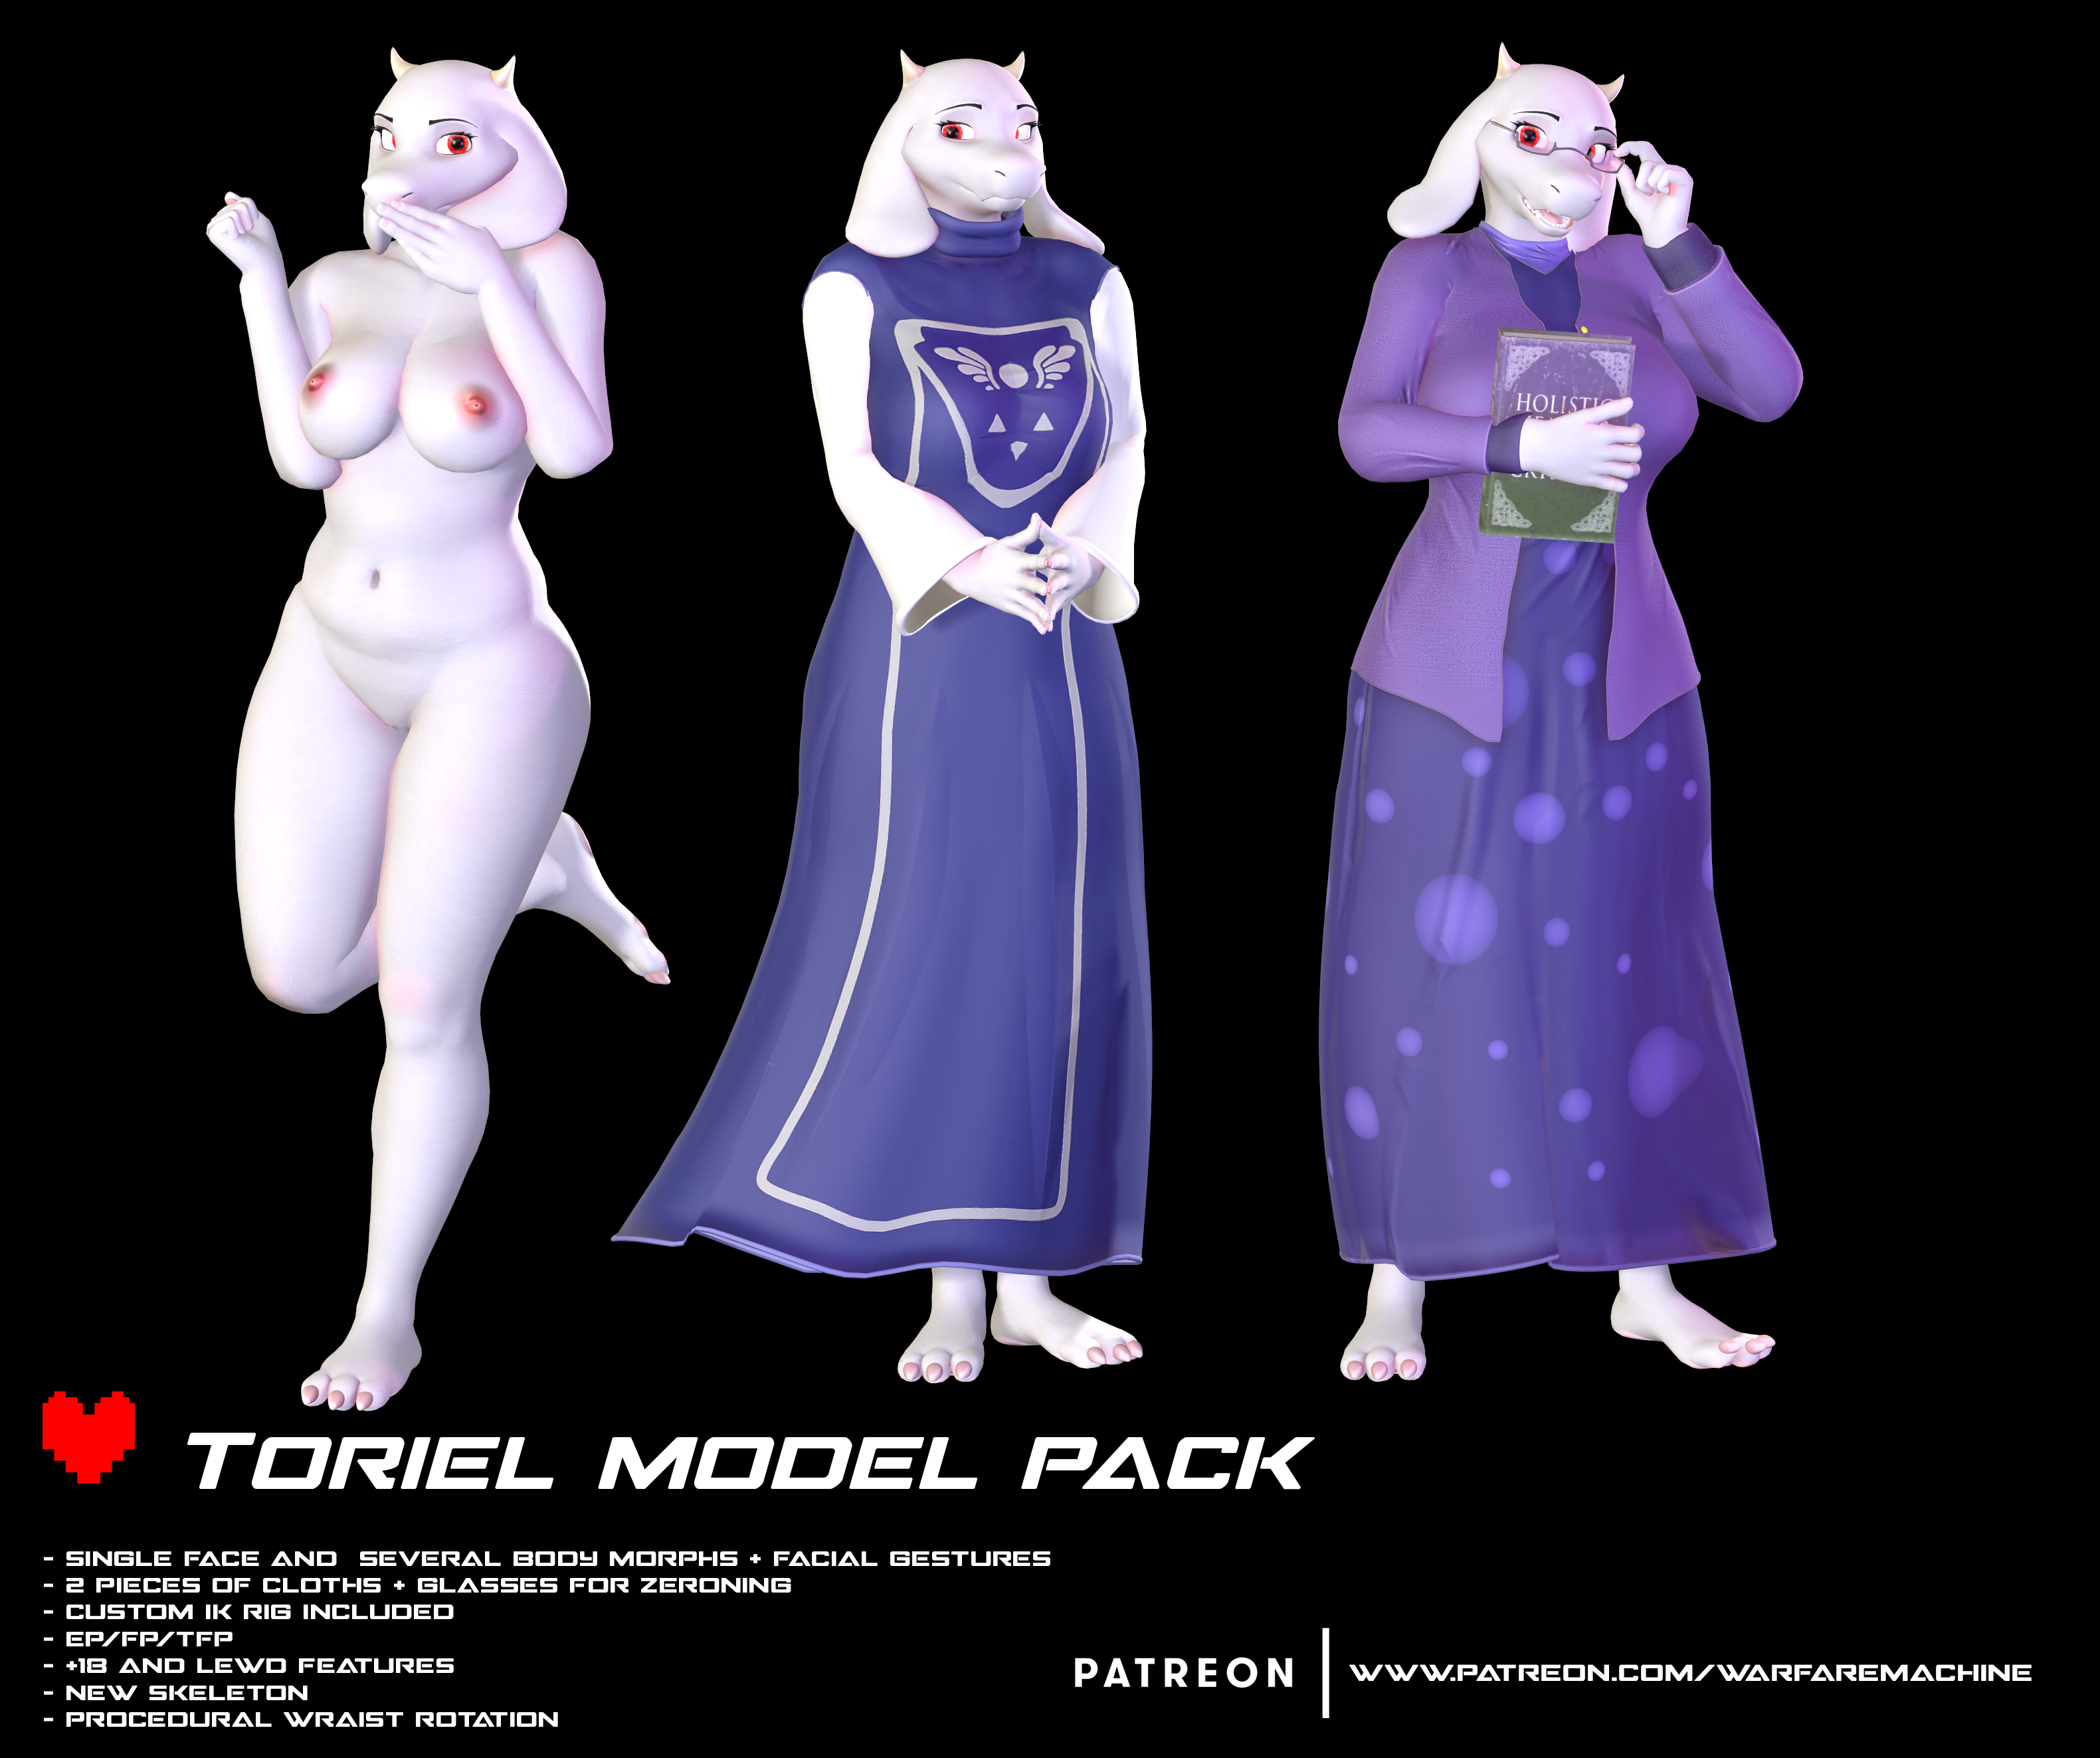 Ychan - f - 3d model furry females - 3d model furry females